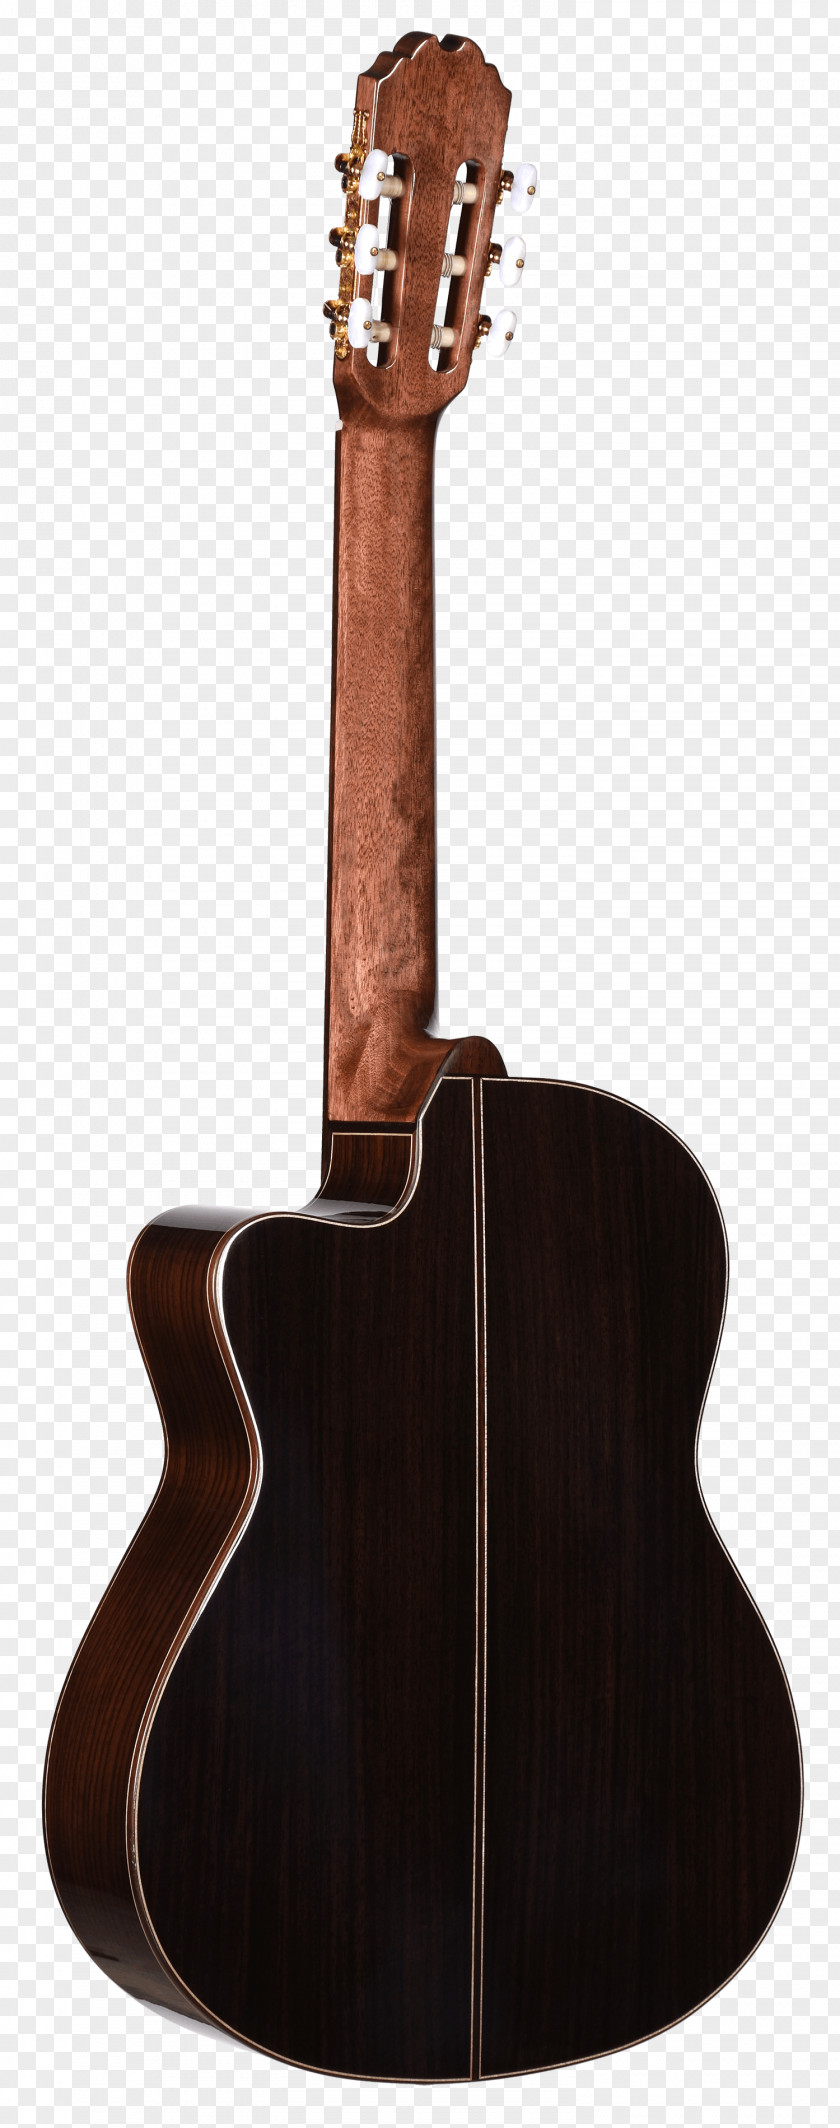 Compact Bone Model Acoustic Guitar Cutaway Yamaha A3R C. F. Martin & Company PNG